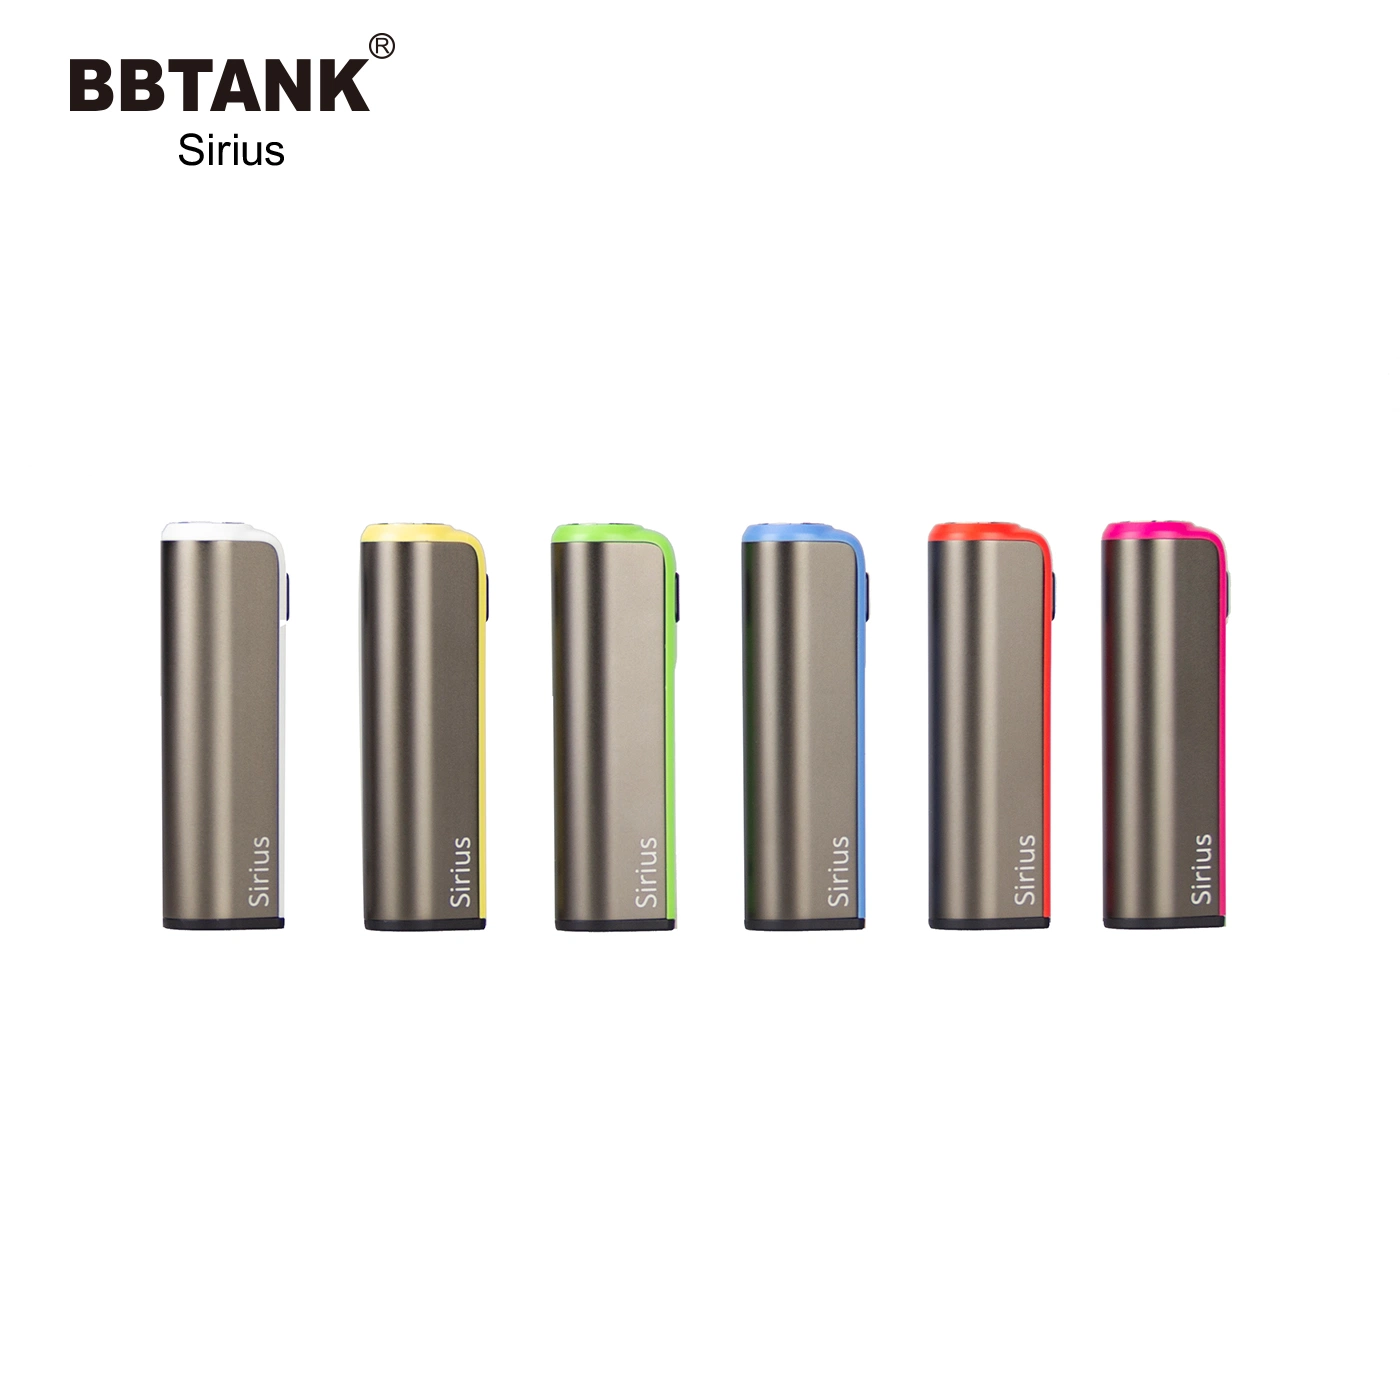 Palm Size 650 mAh Recharge Vape Pen Bbtank Sirius 510 Thread Battery